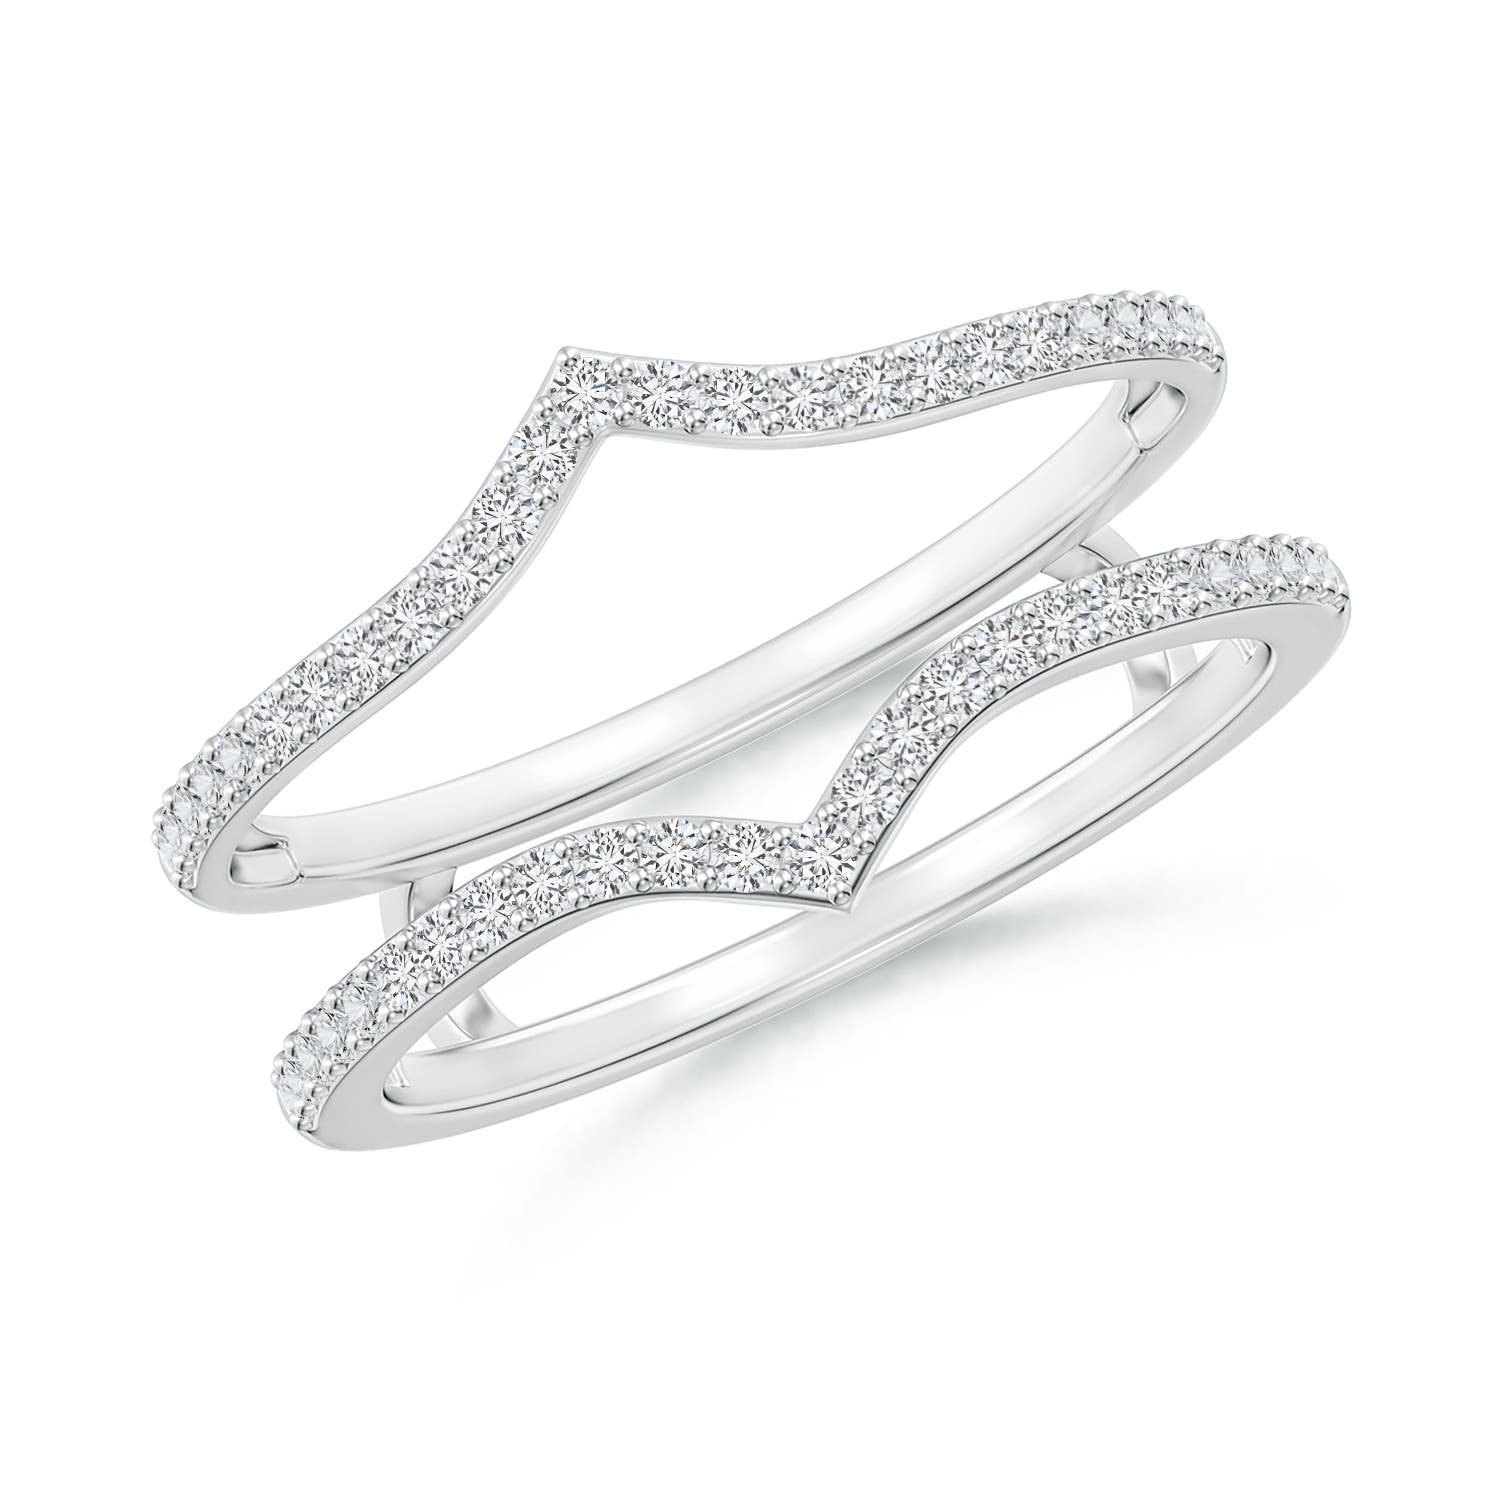 Halo Ring Guard / Ring Enhancer / Wedding Ring Enhancer / Natural Diamonds  / Solitaire Enhancer / 14K White Gold 